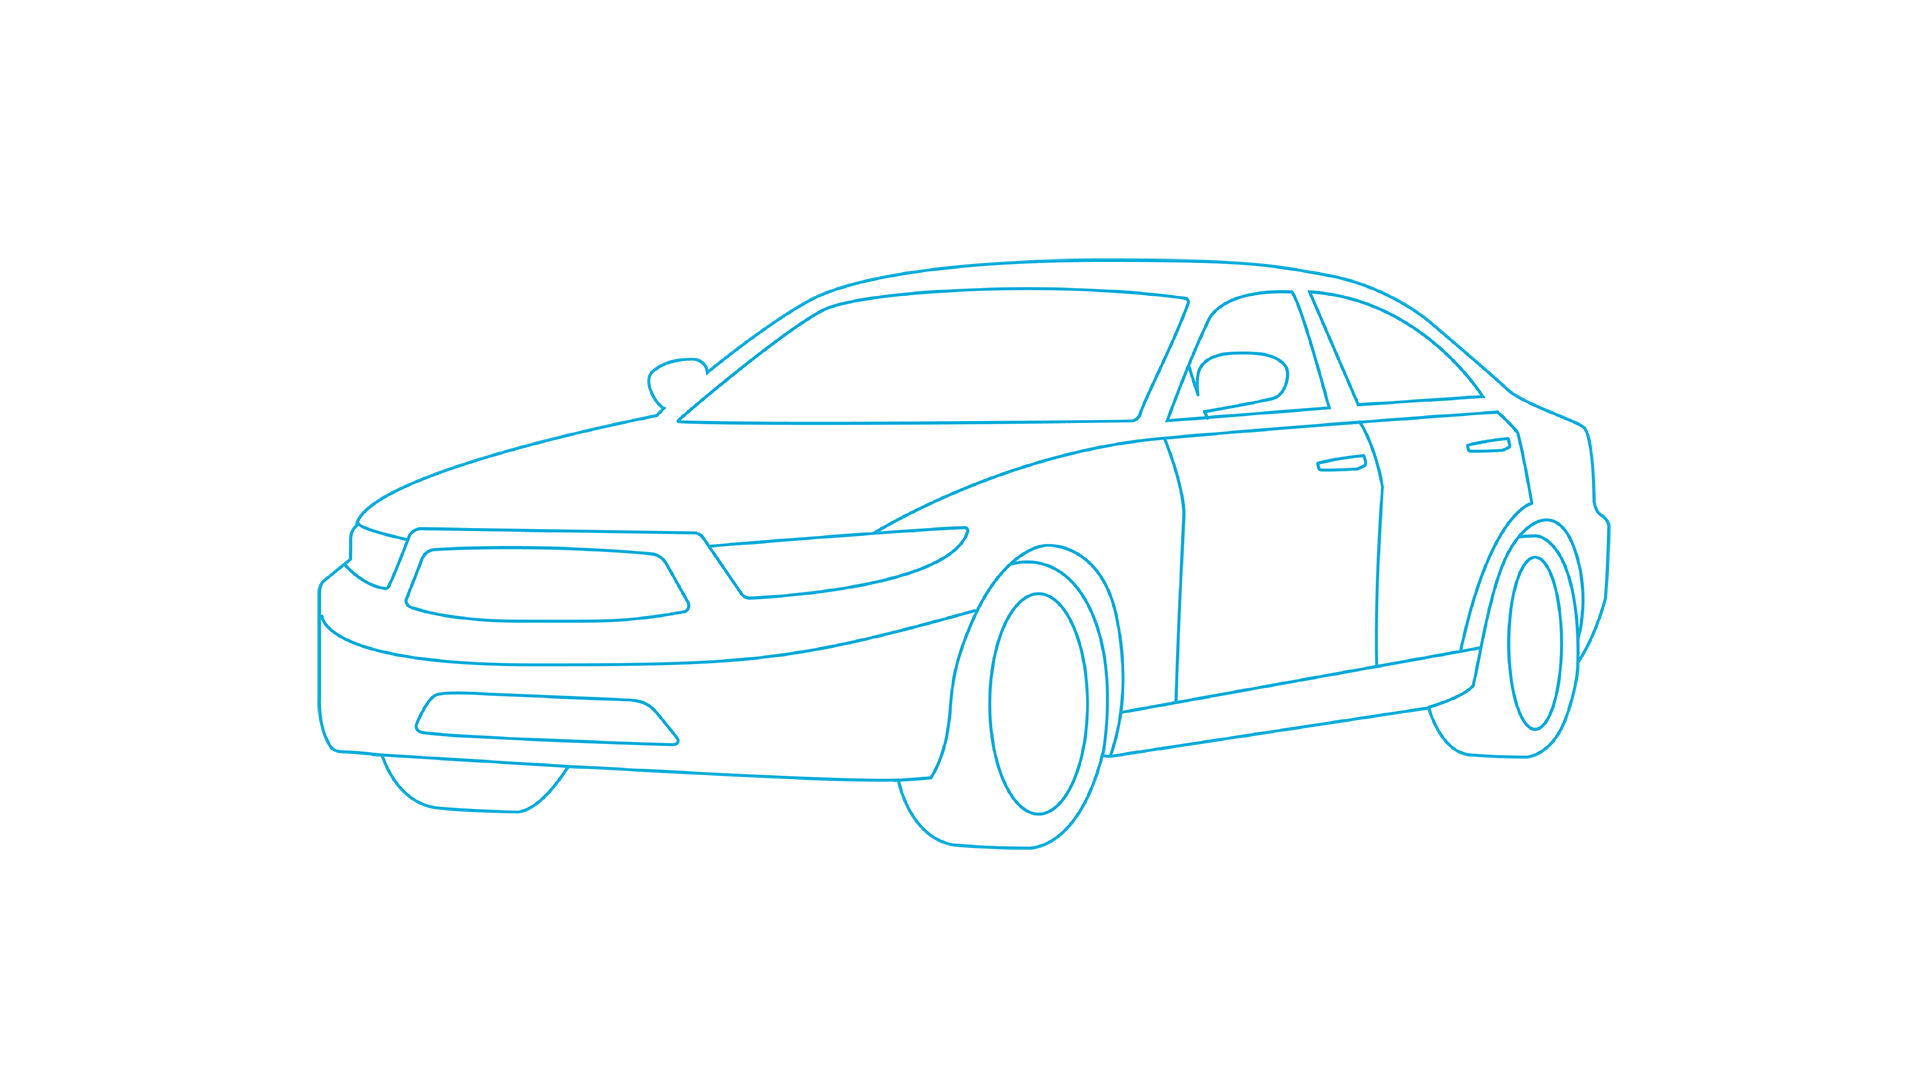 Toyota Tundra model image.